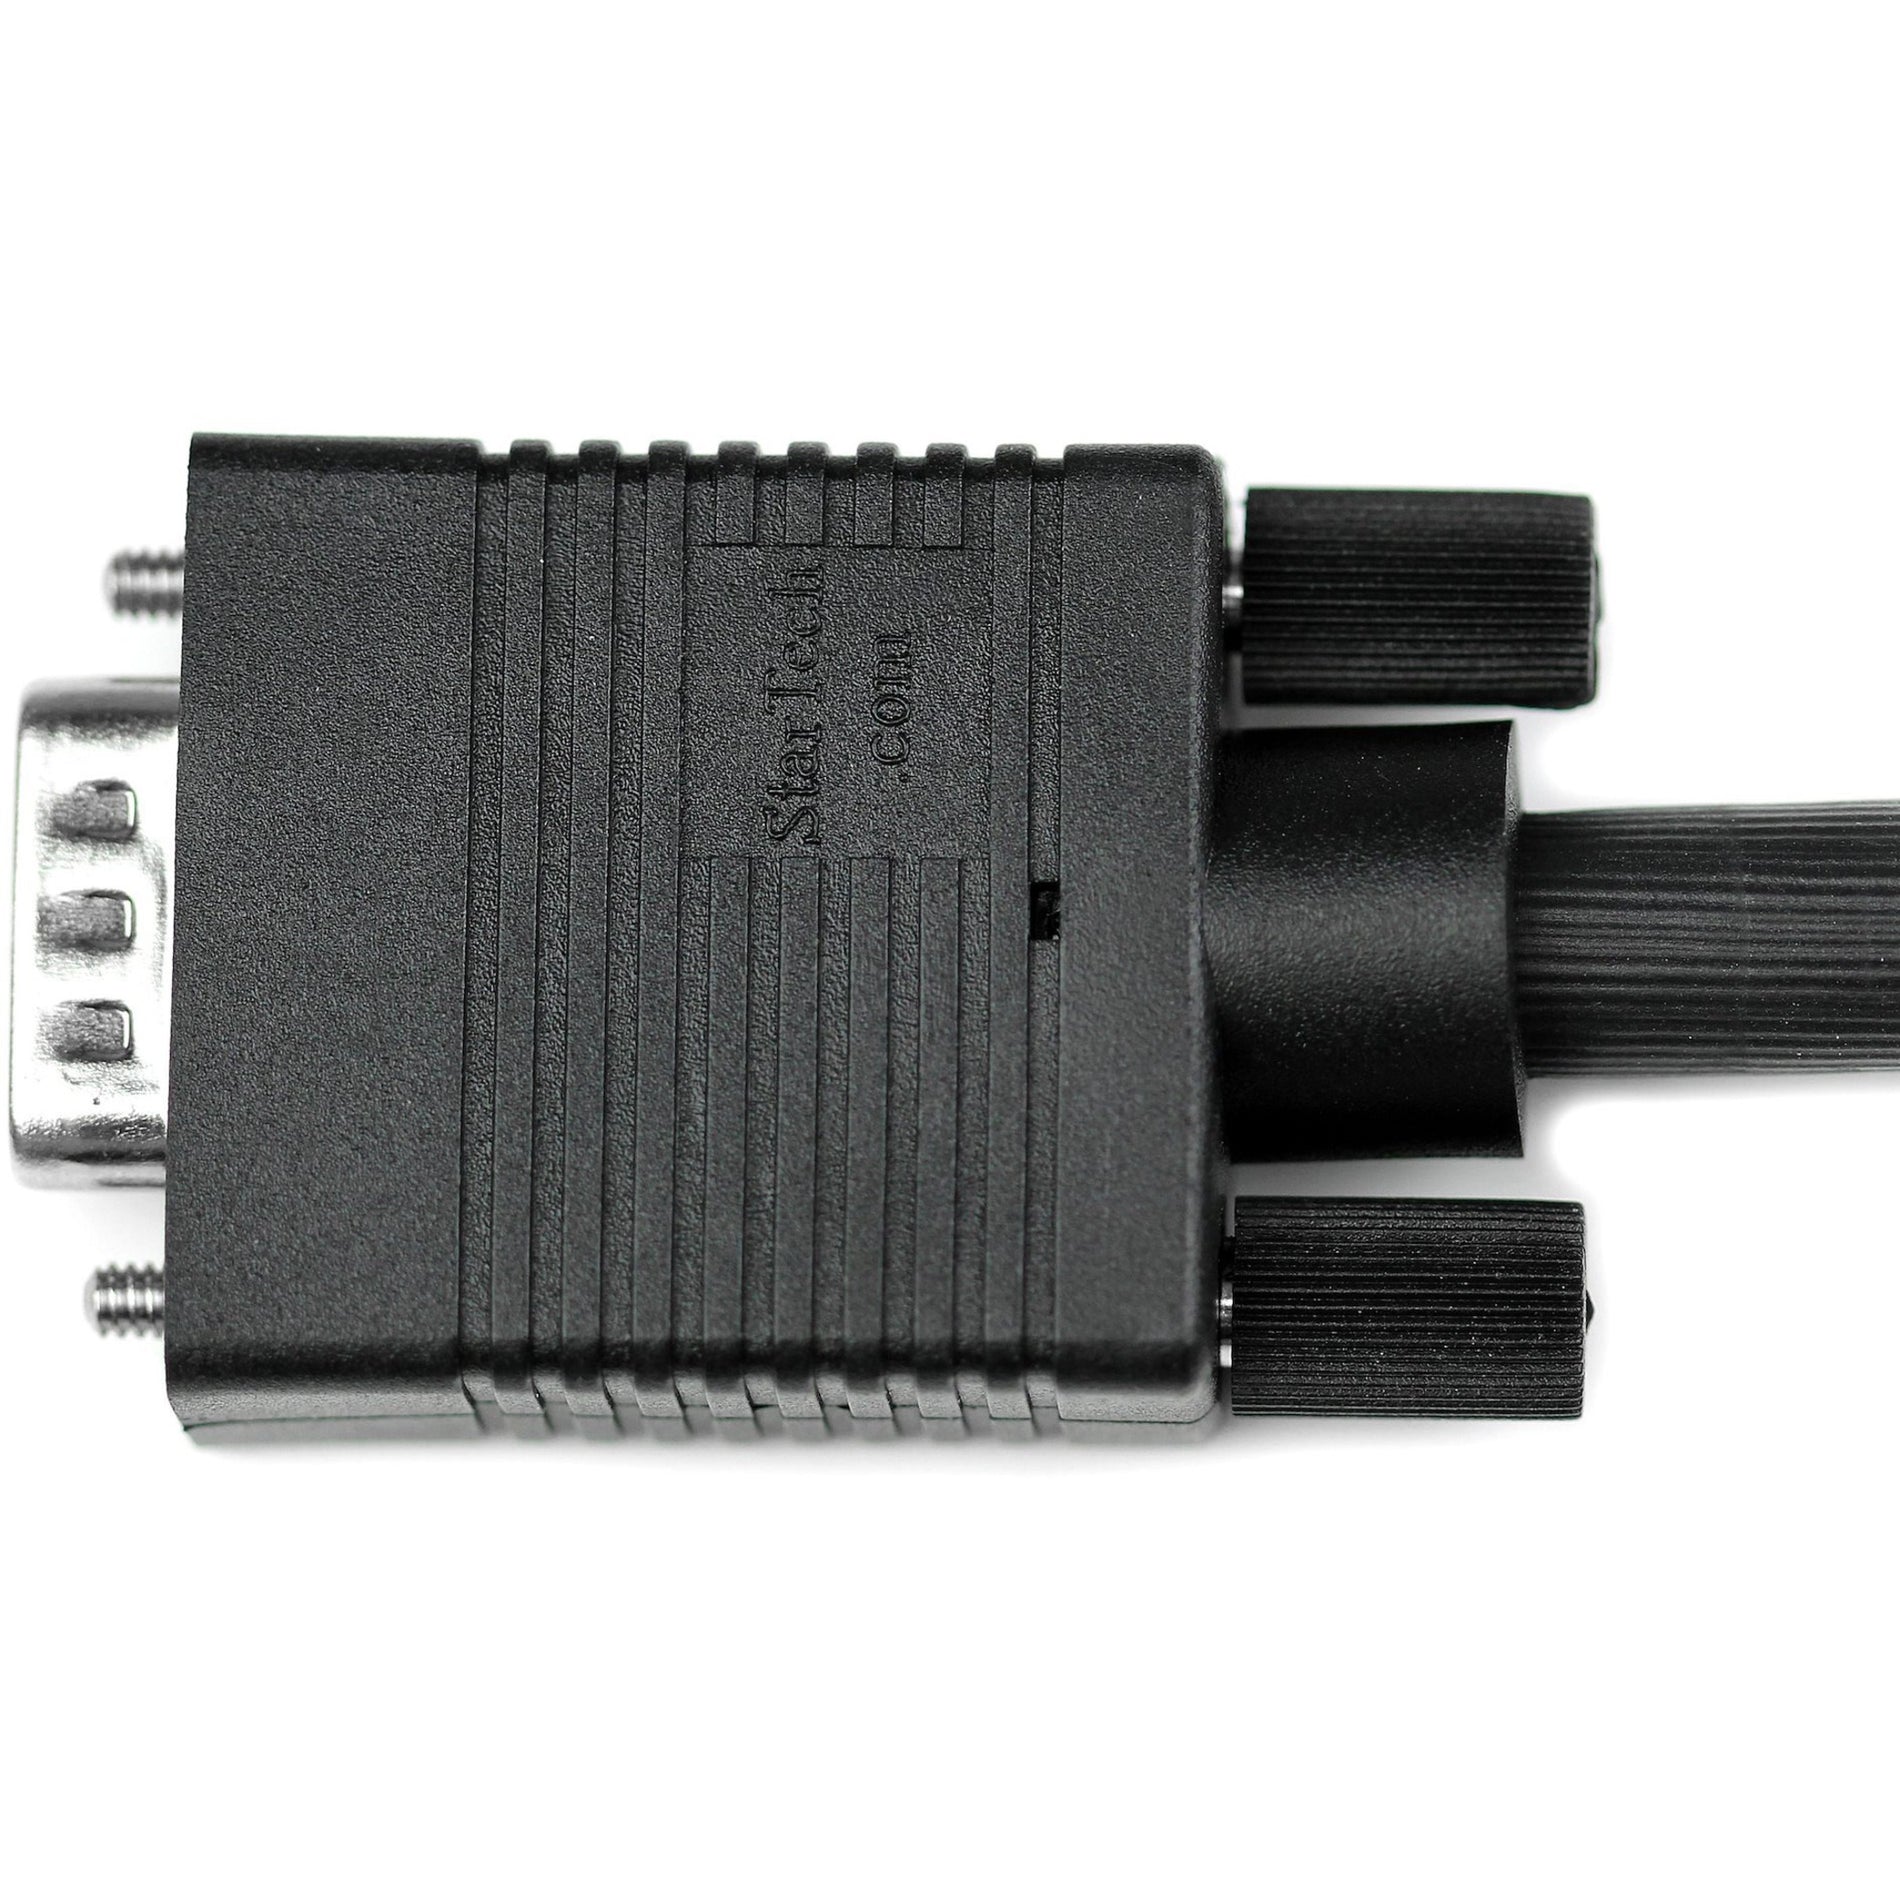 StarTech.com MXT101MMHQ10 10 英尺同轴高分辨率监视器 VGA 电缆 HD15 M/M，成型，电磁干扰保护，1920 x 1200，黑色 品牌名称： 星美科技